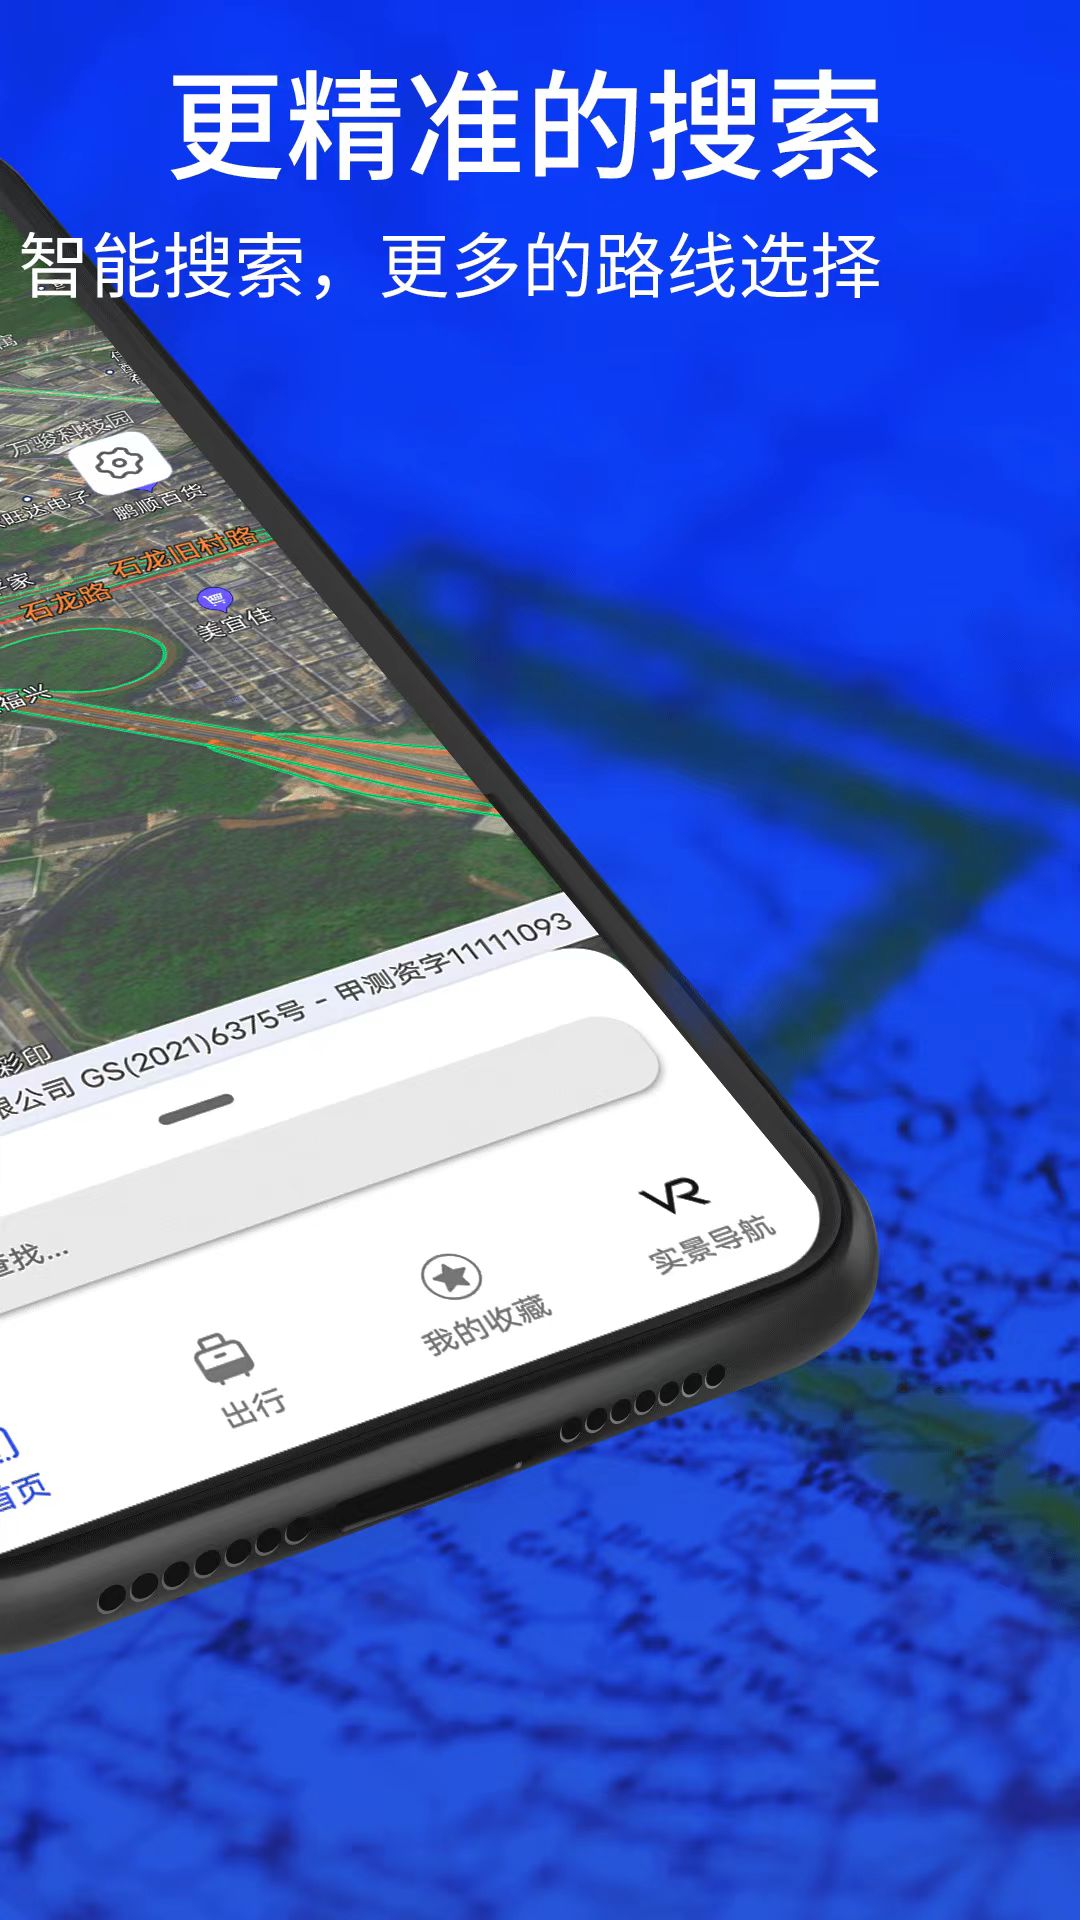 3D实景导航地图app最新版图2: